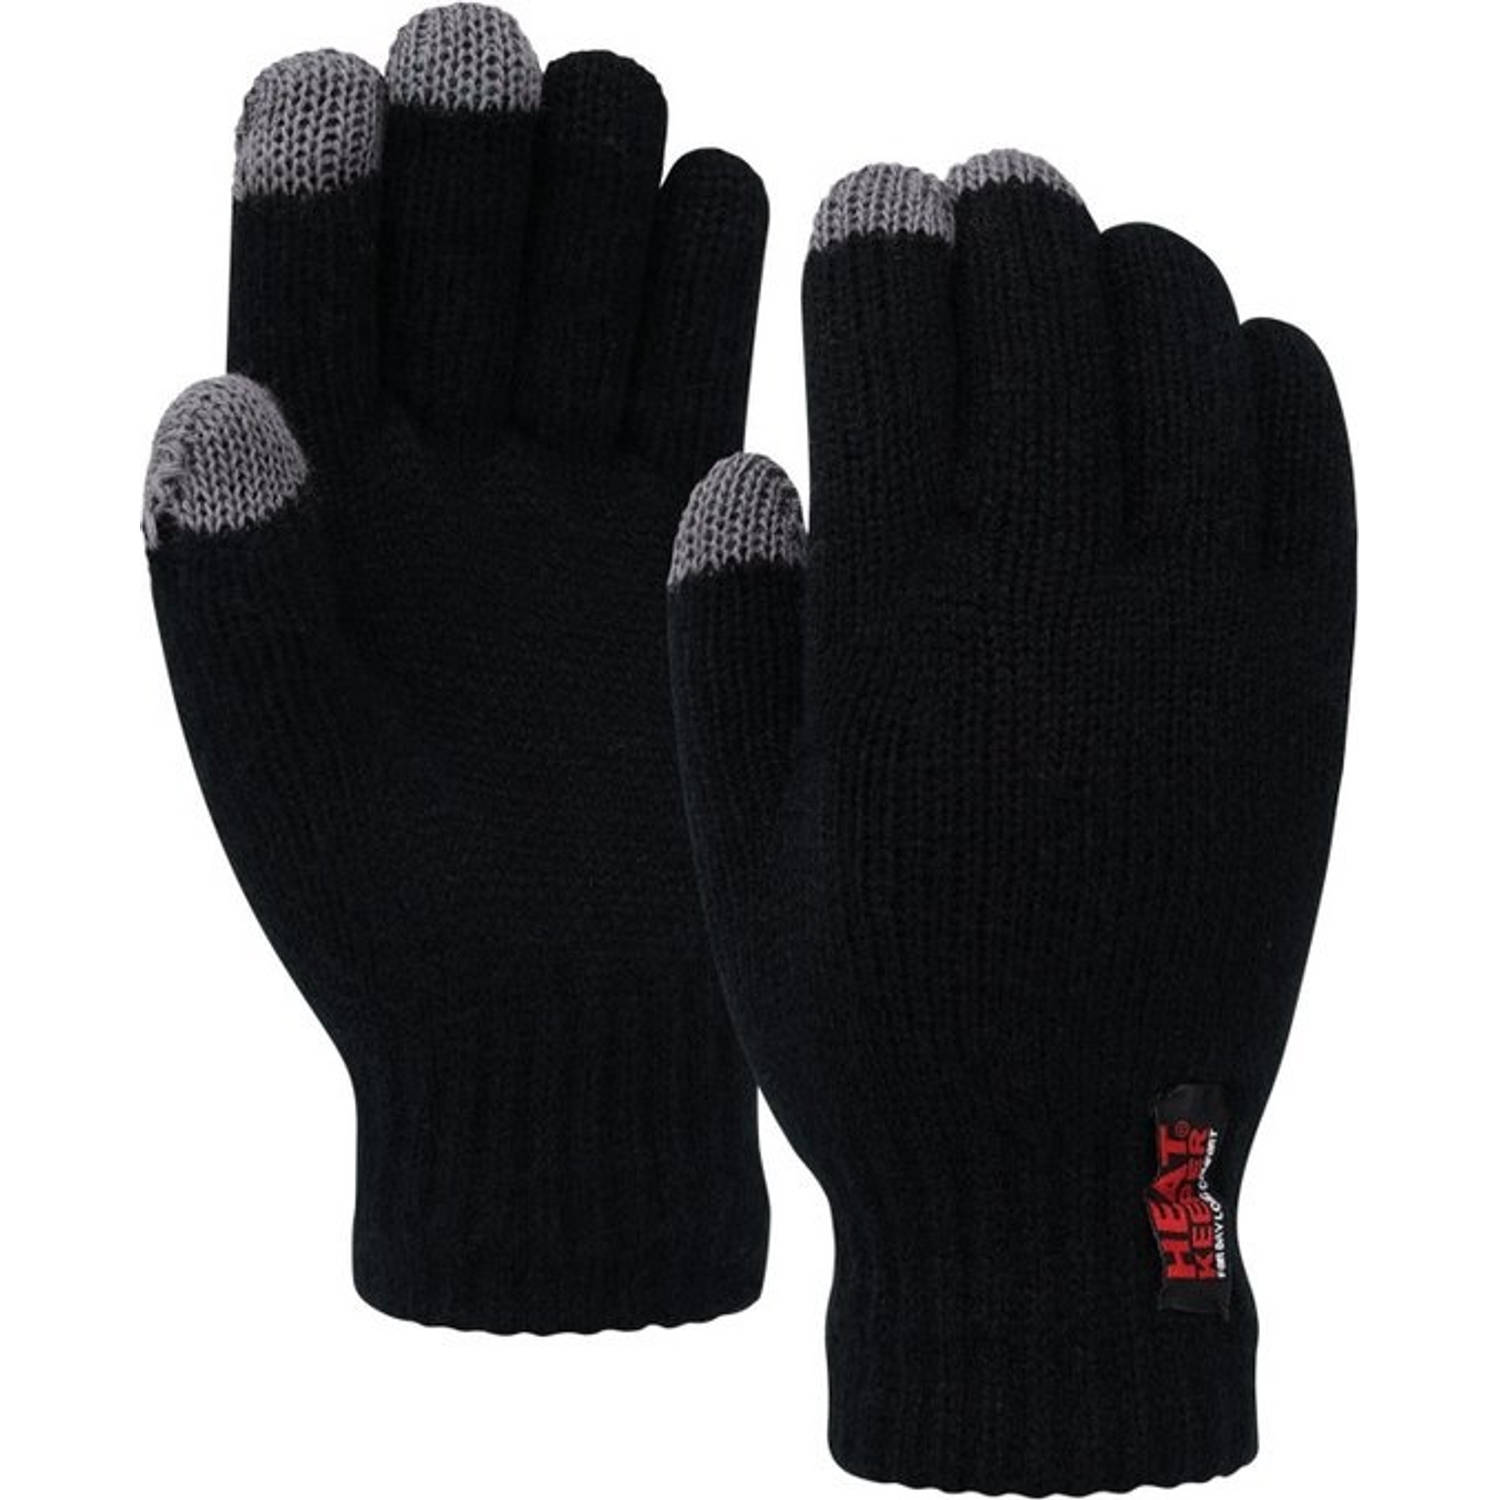 Heat Keeper Thermo Handschoenen - Kleur Zwart - Extra Warm - One Size